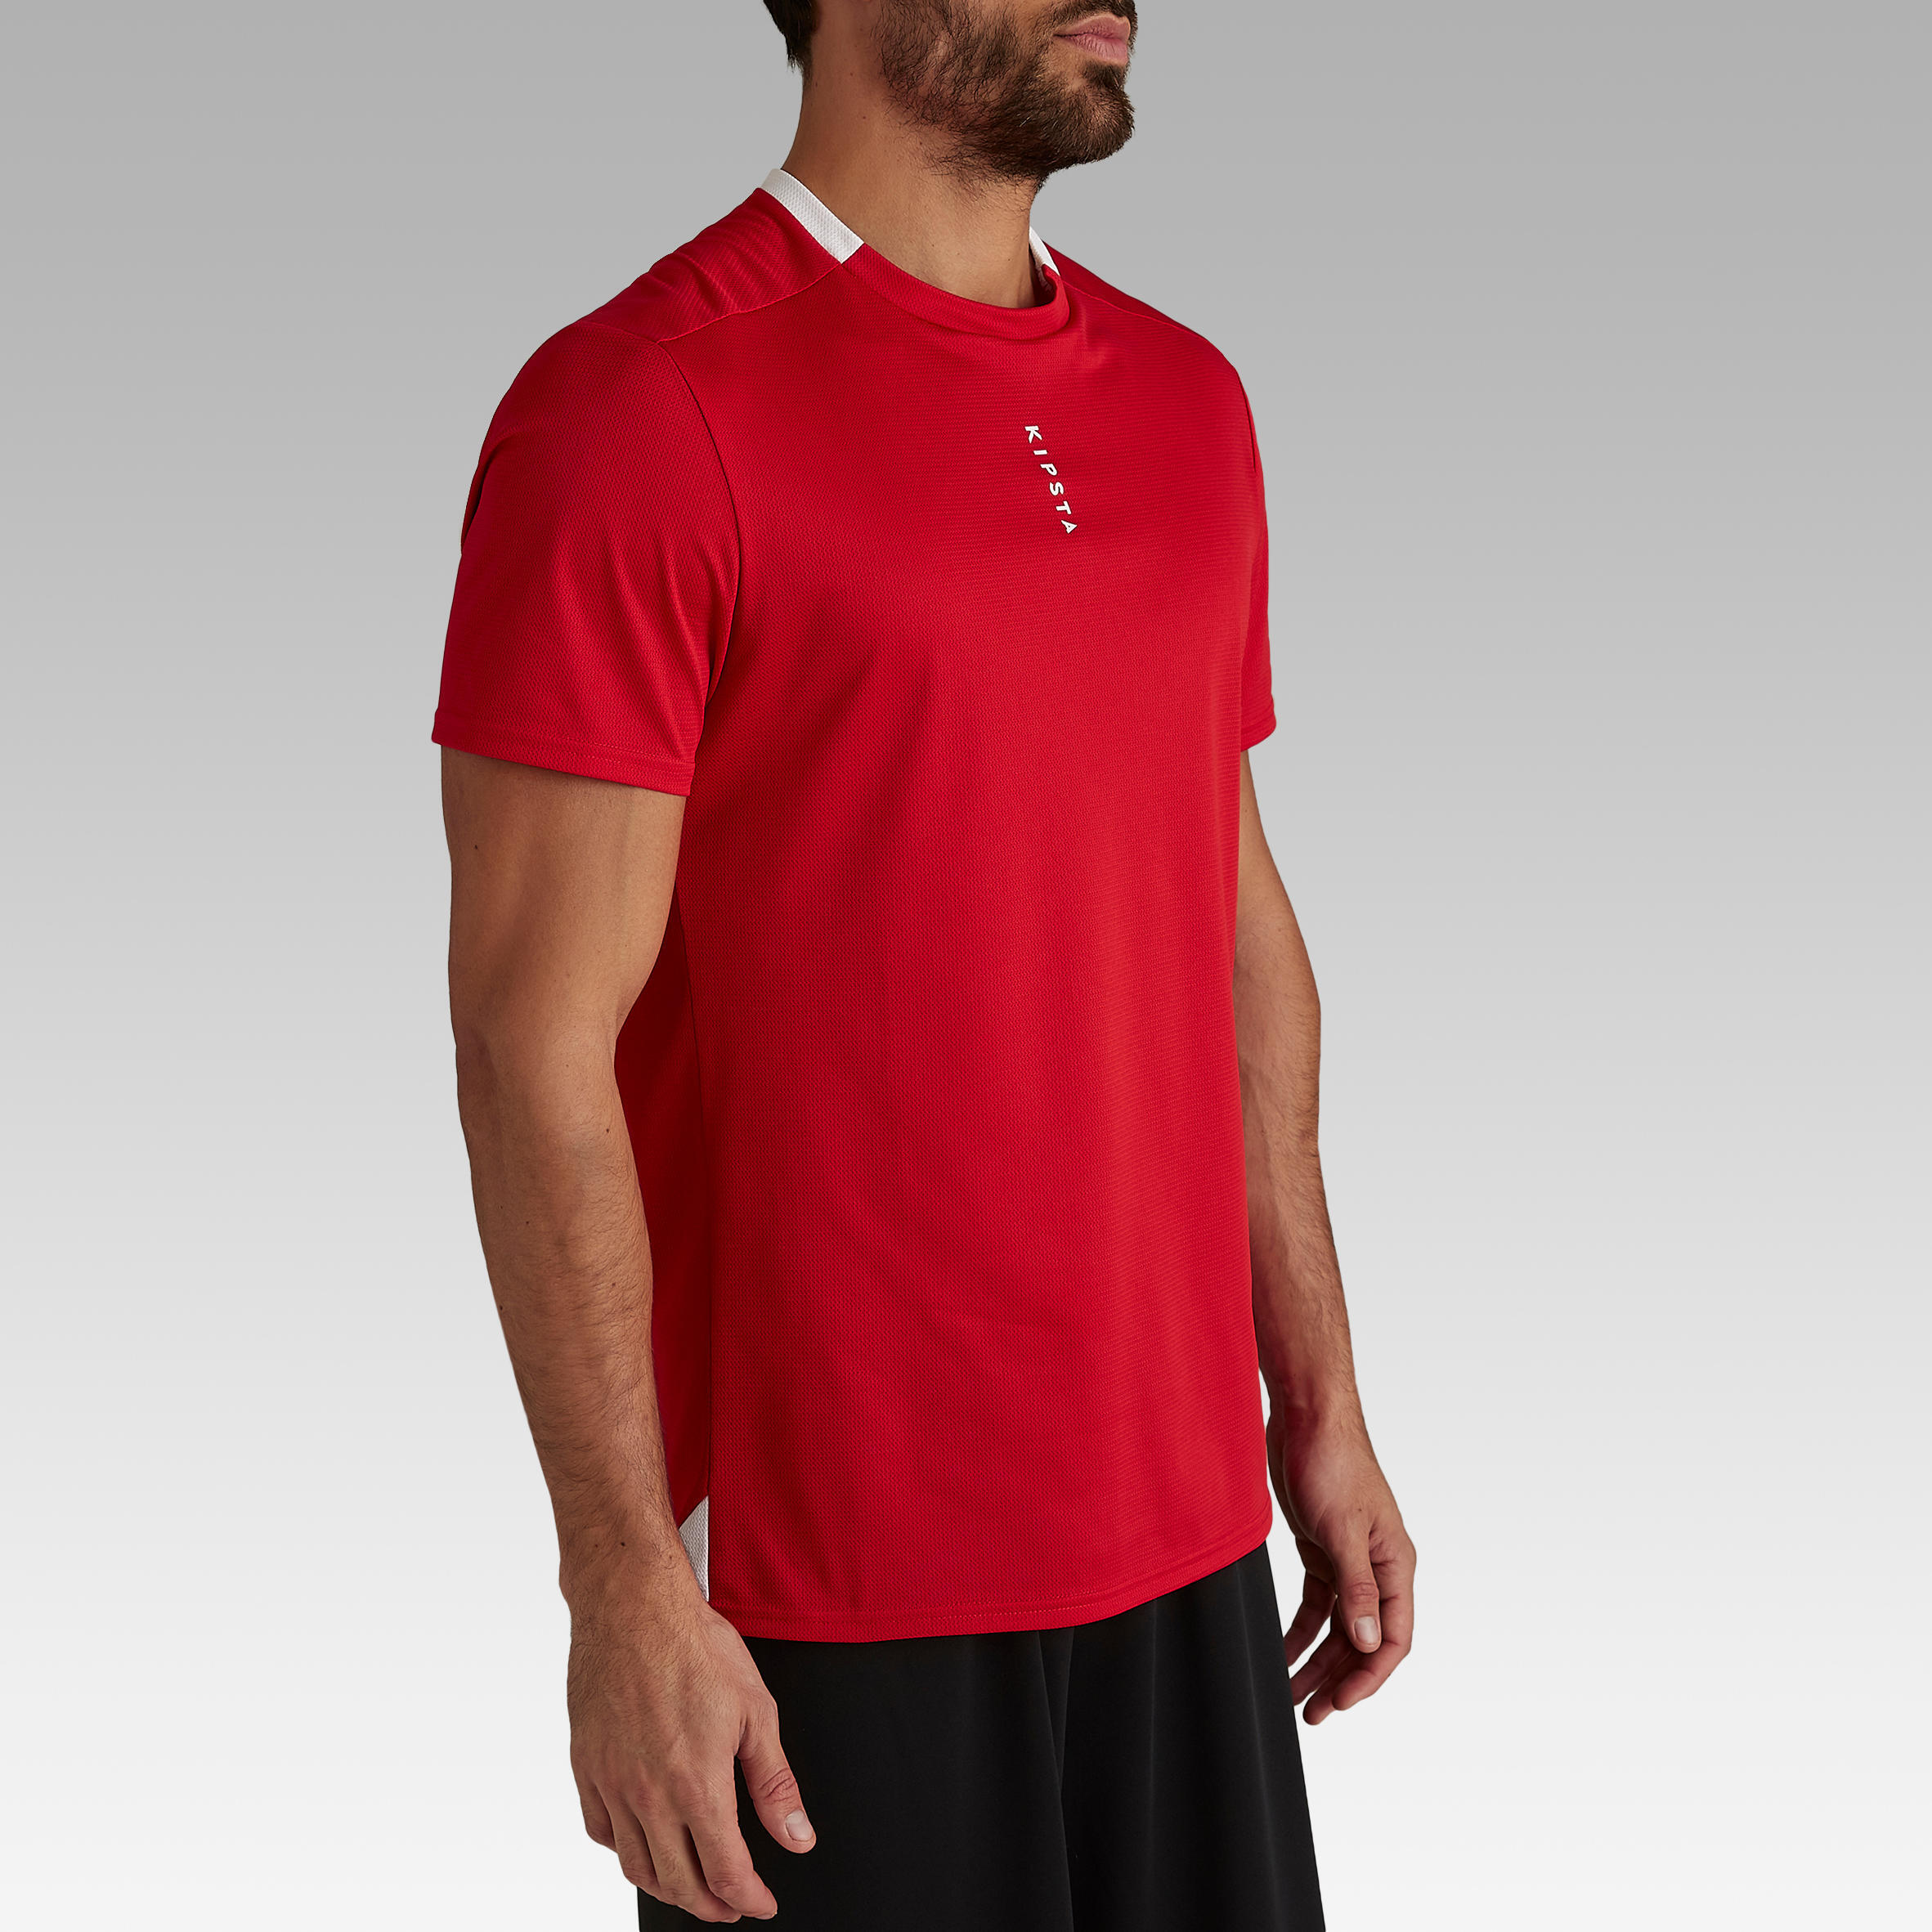 Adult Football Shirt Essential Club - Red 20/34